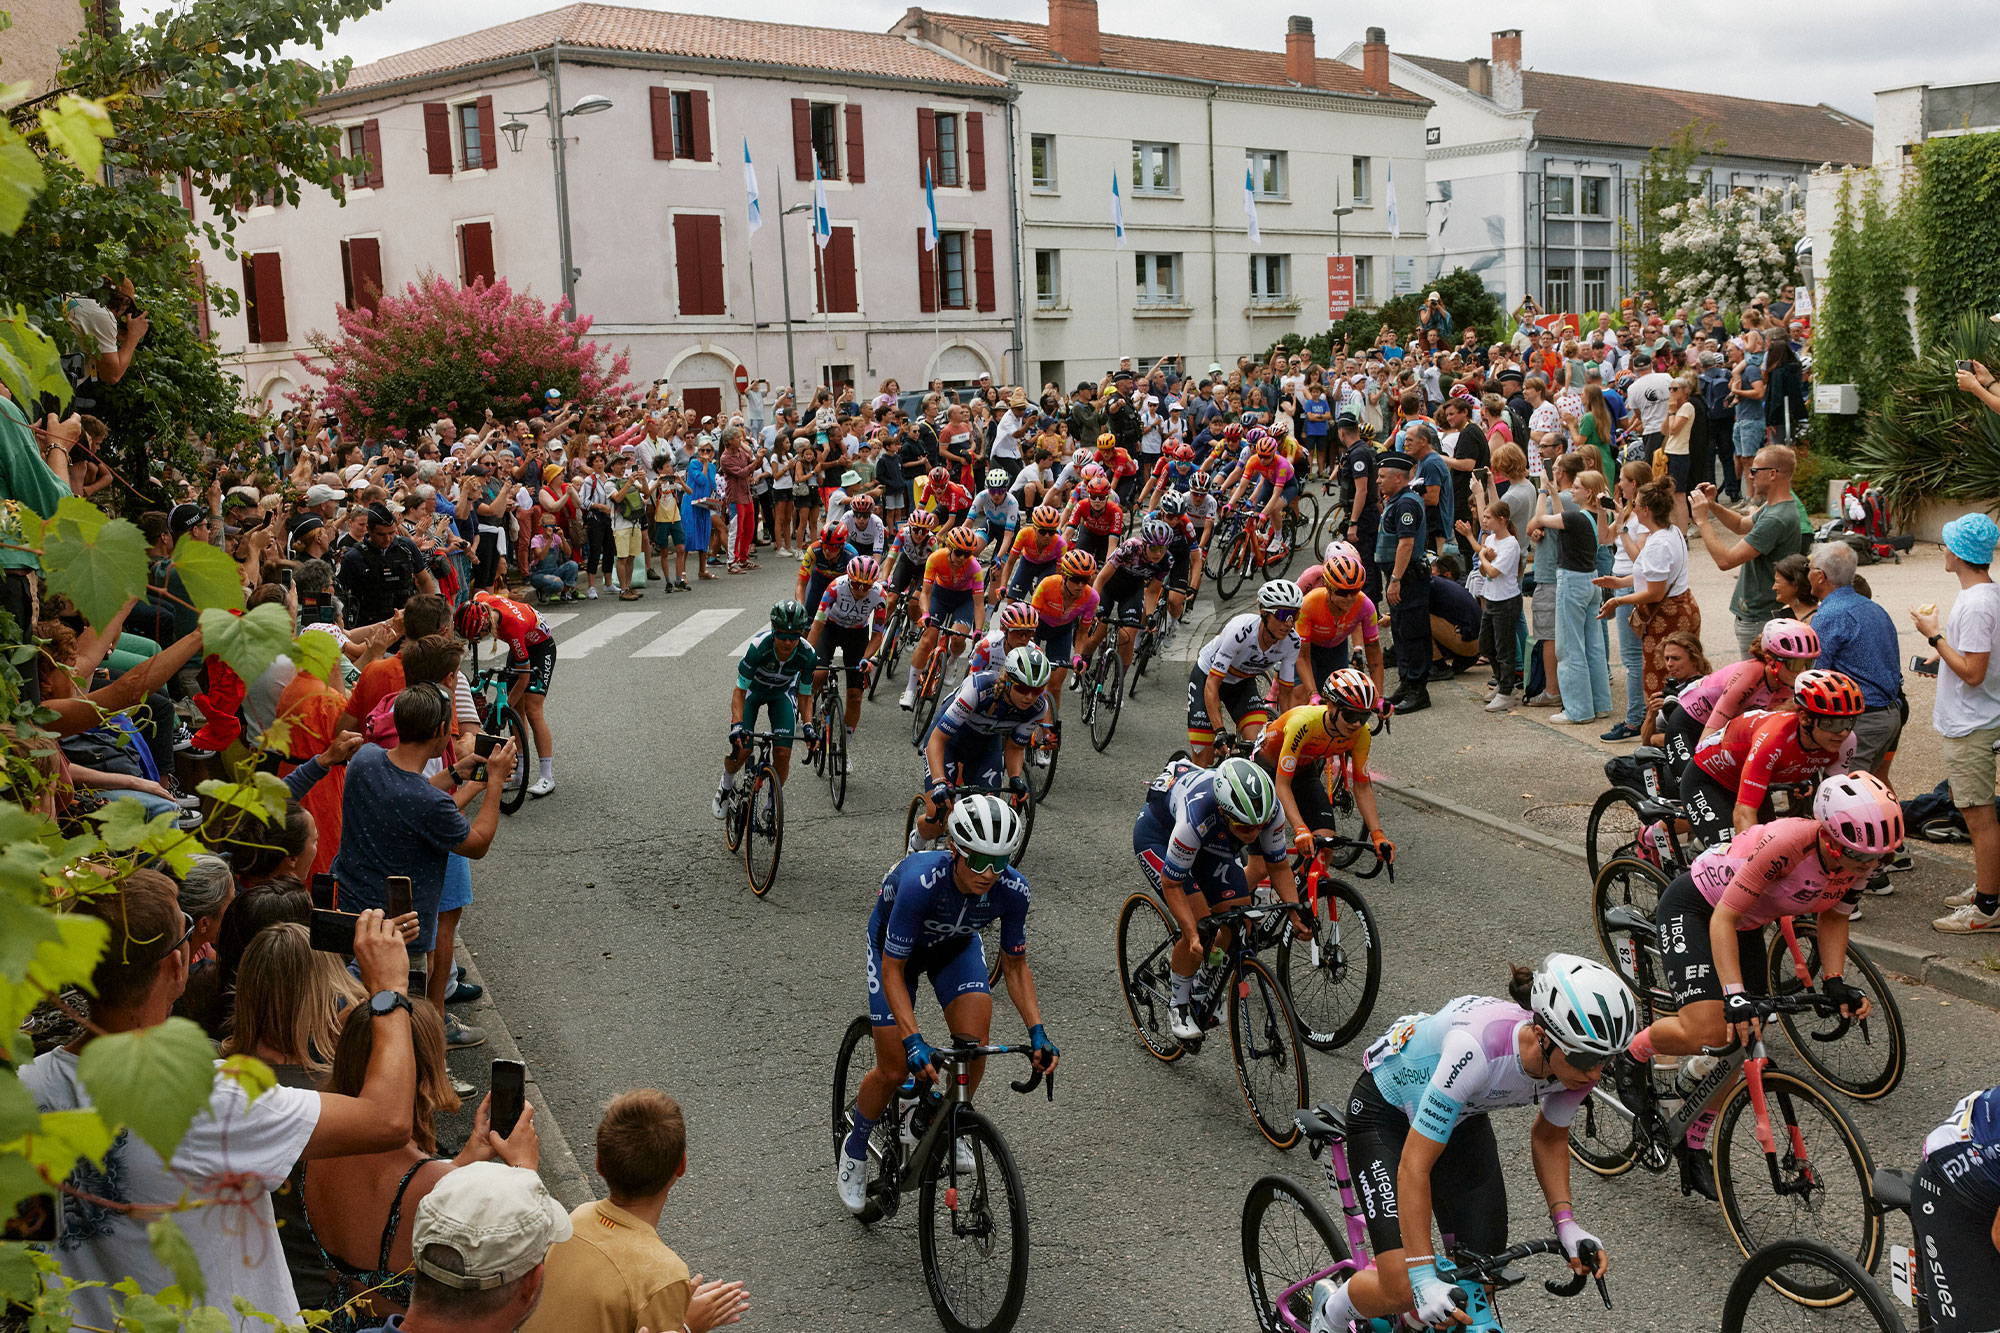 The peloton cornering through crowded village